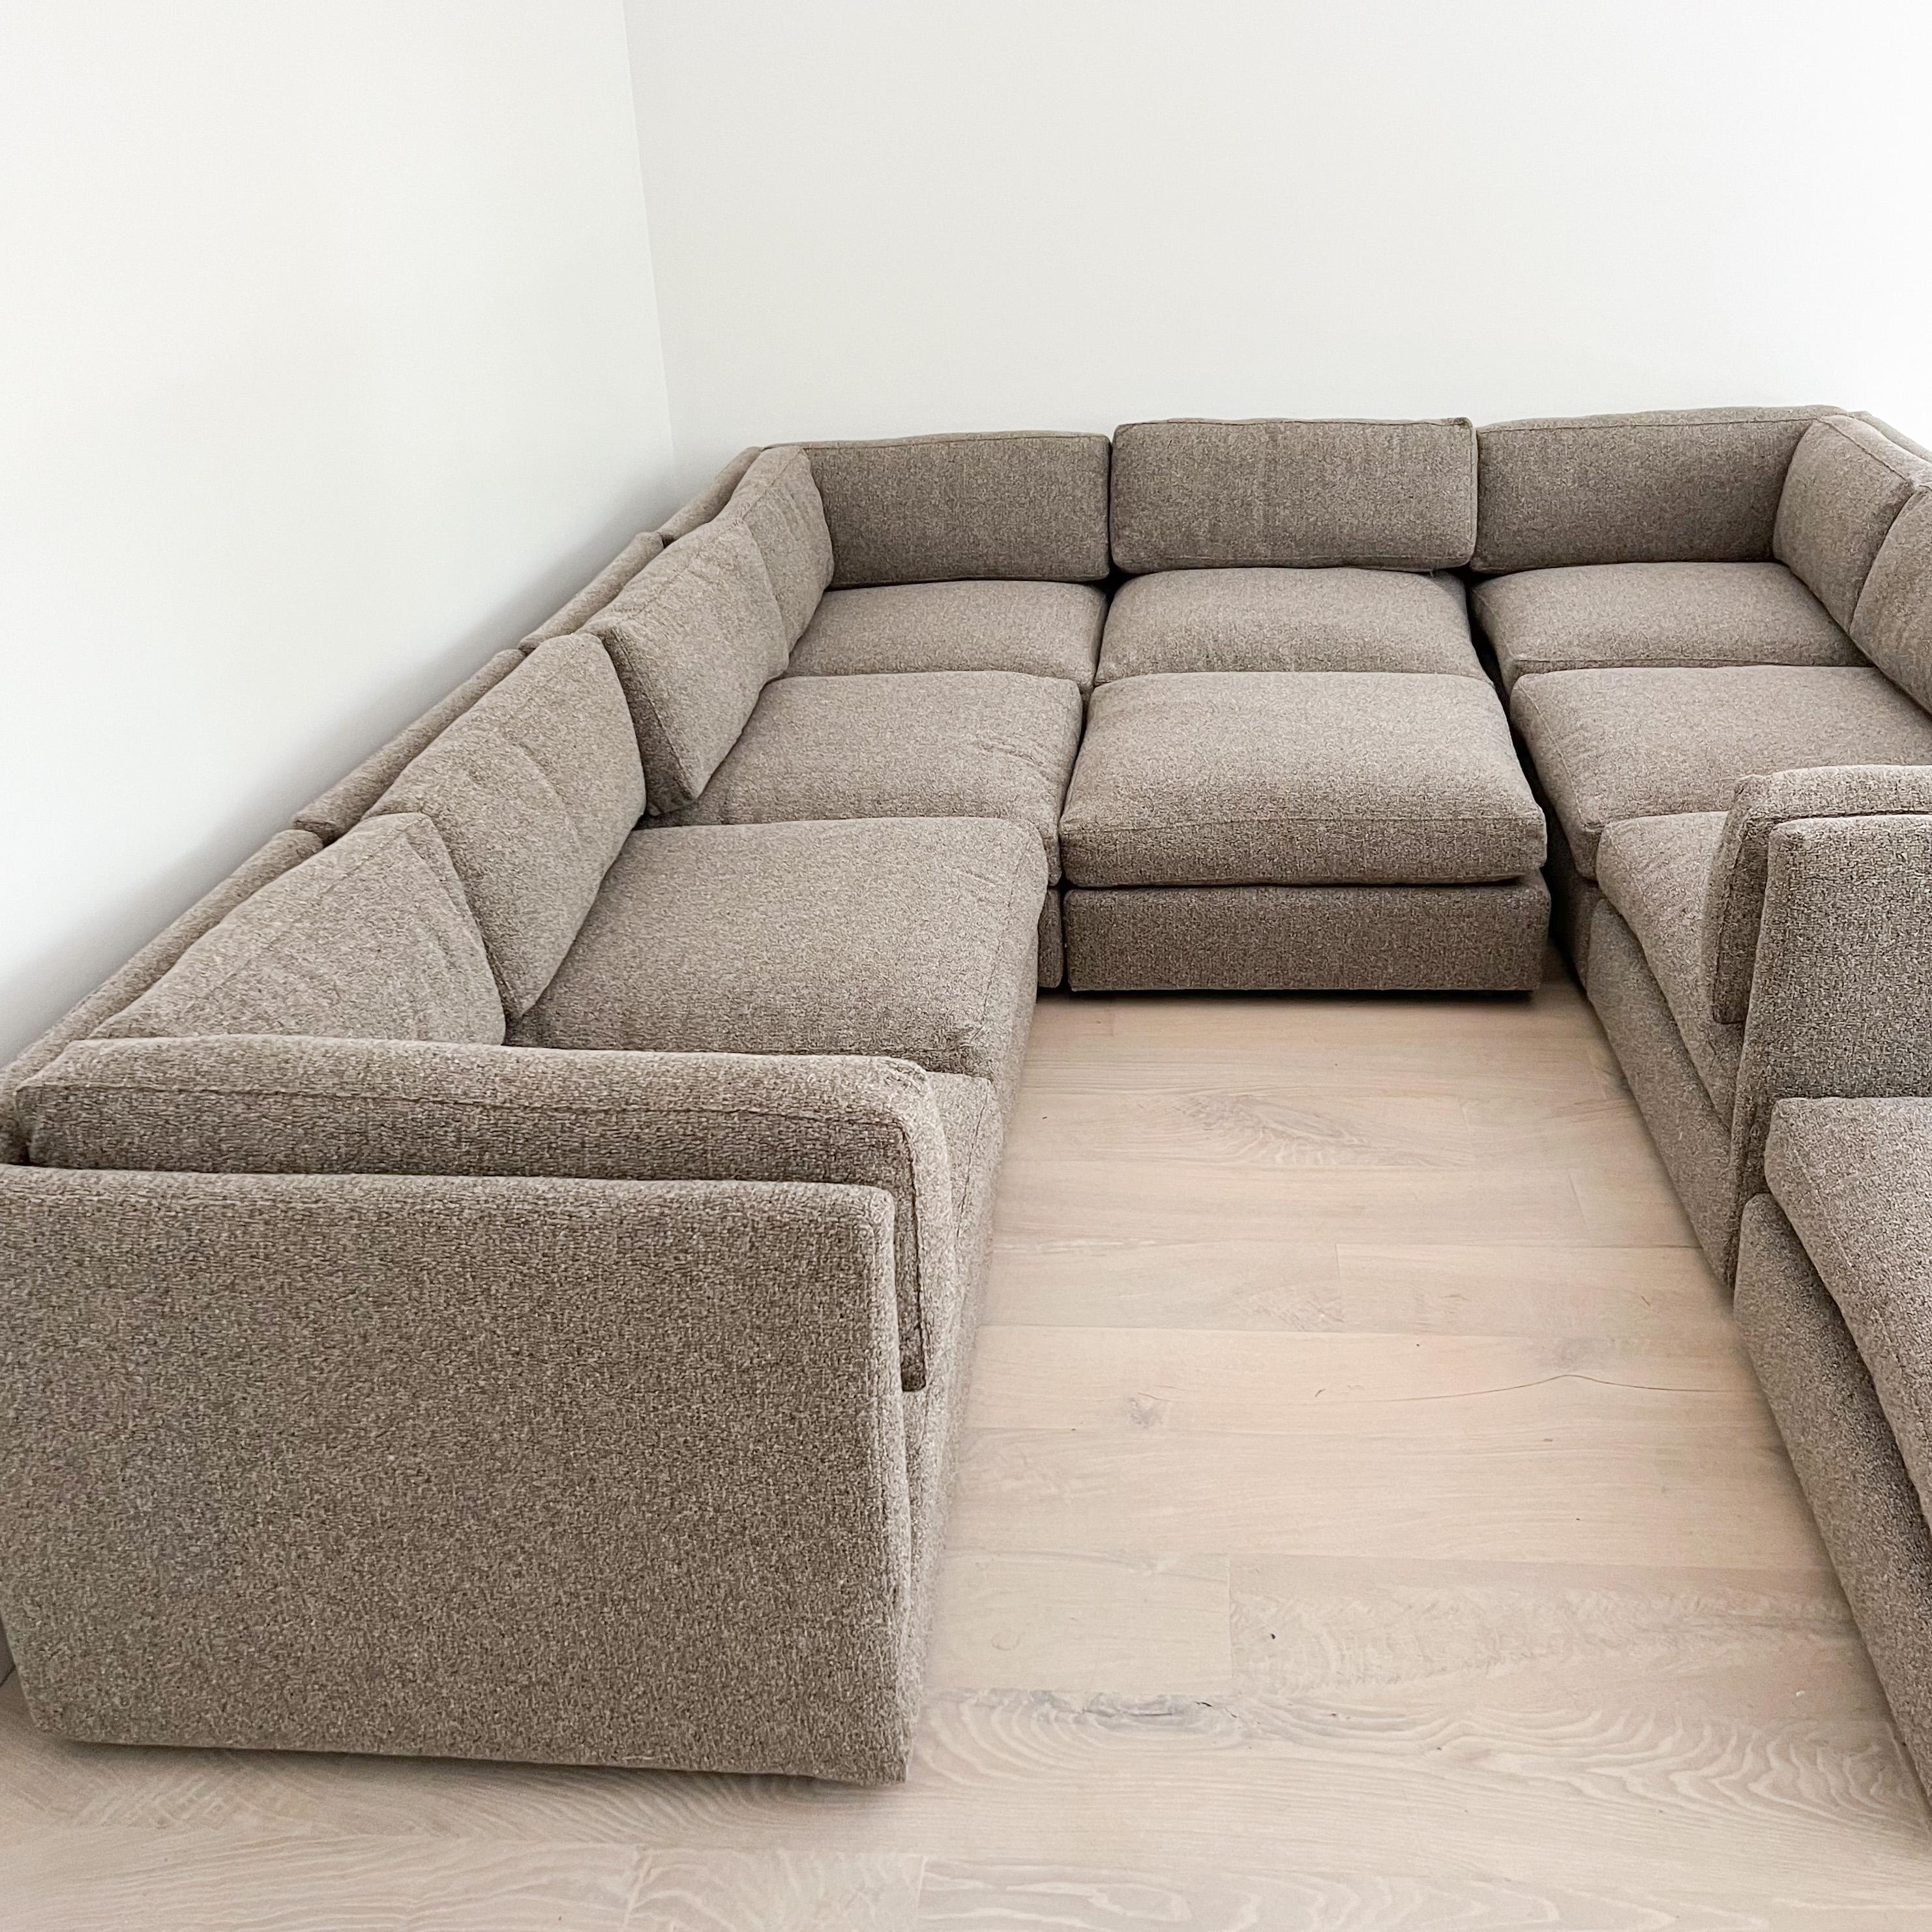 Milo Baughman Attributed 10 Piece Modular Sectional Sofa, New Upholstery 10